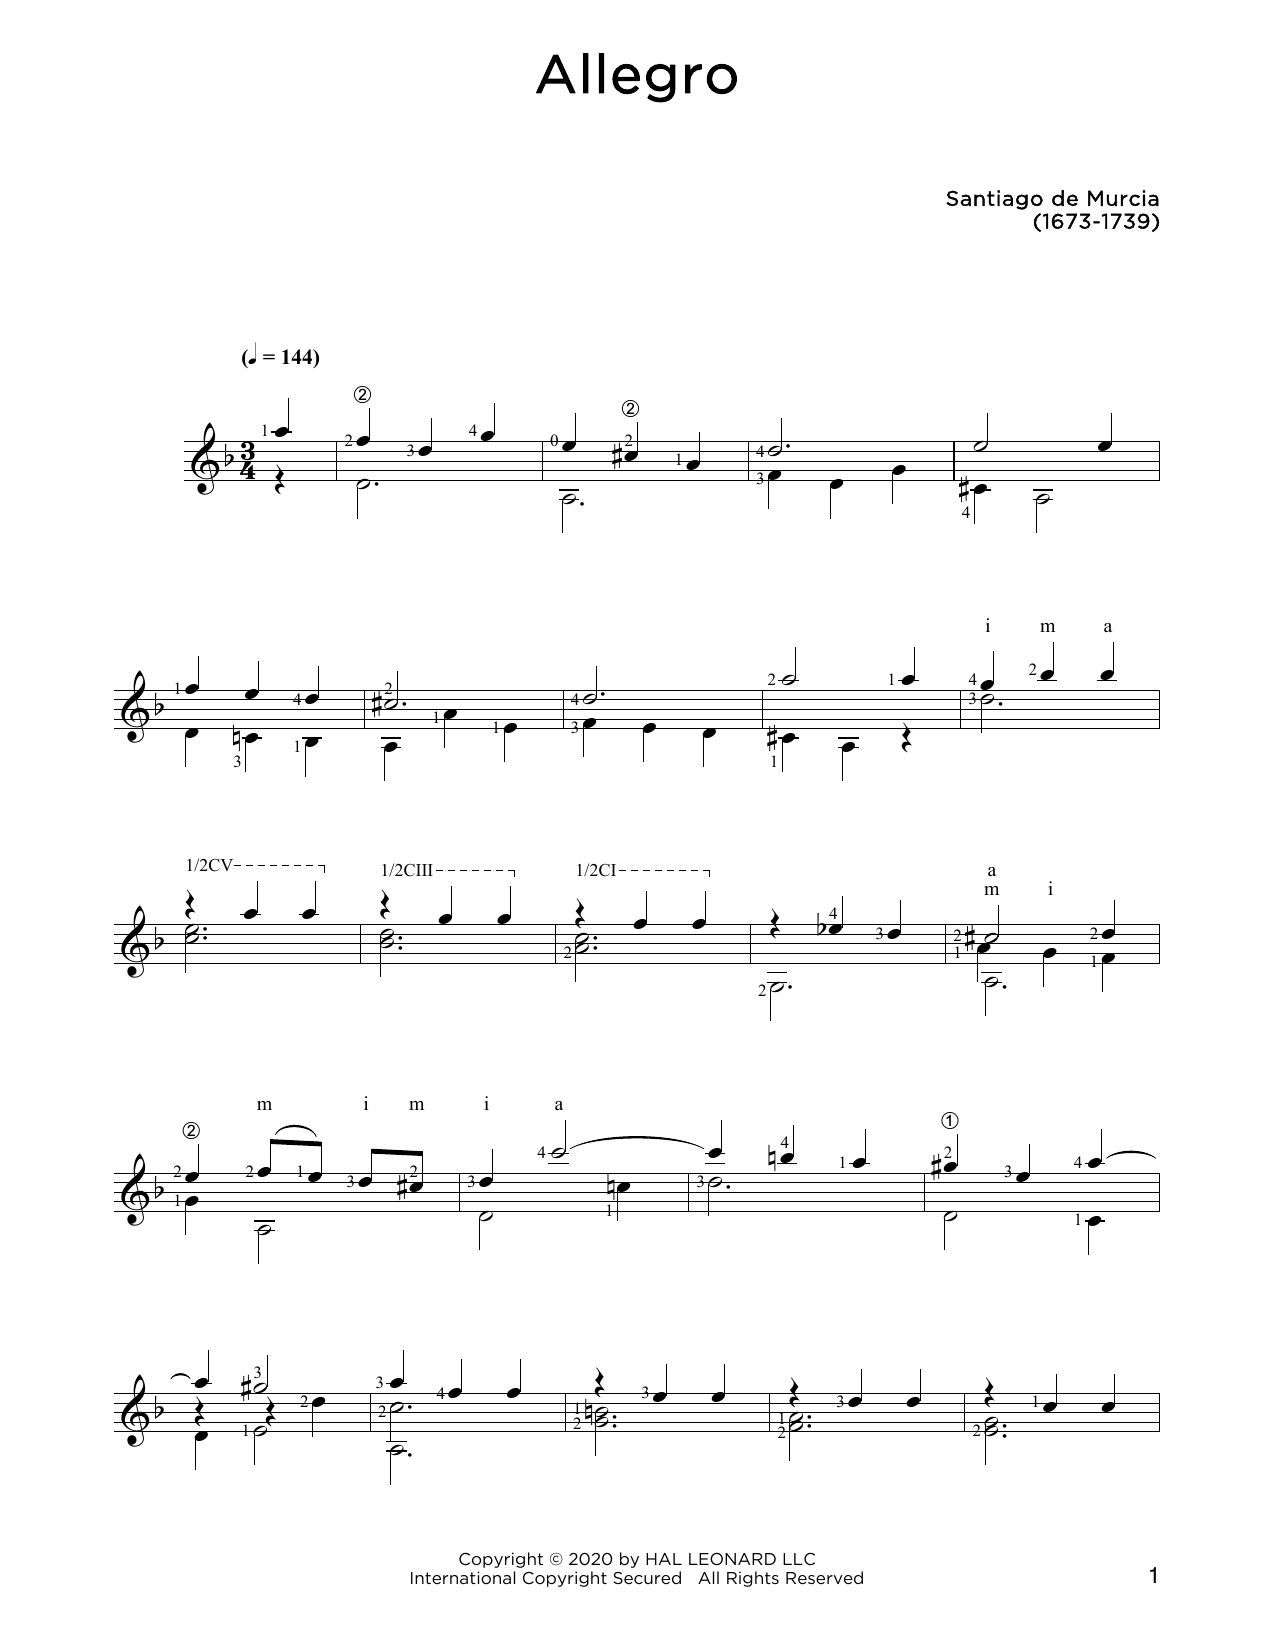 Santiago de Murcia Allegro Sheet Music Notes & Chords for Solo Guitar - Download or Print PDF